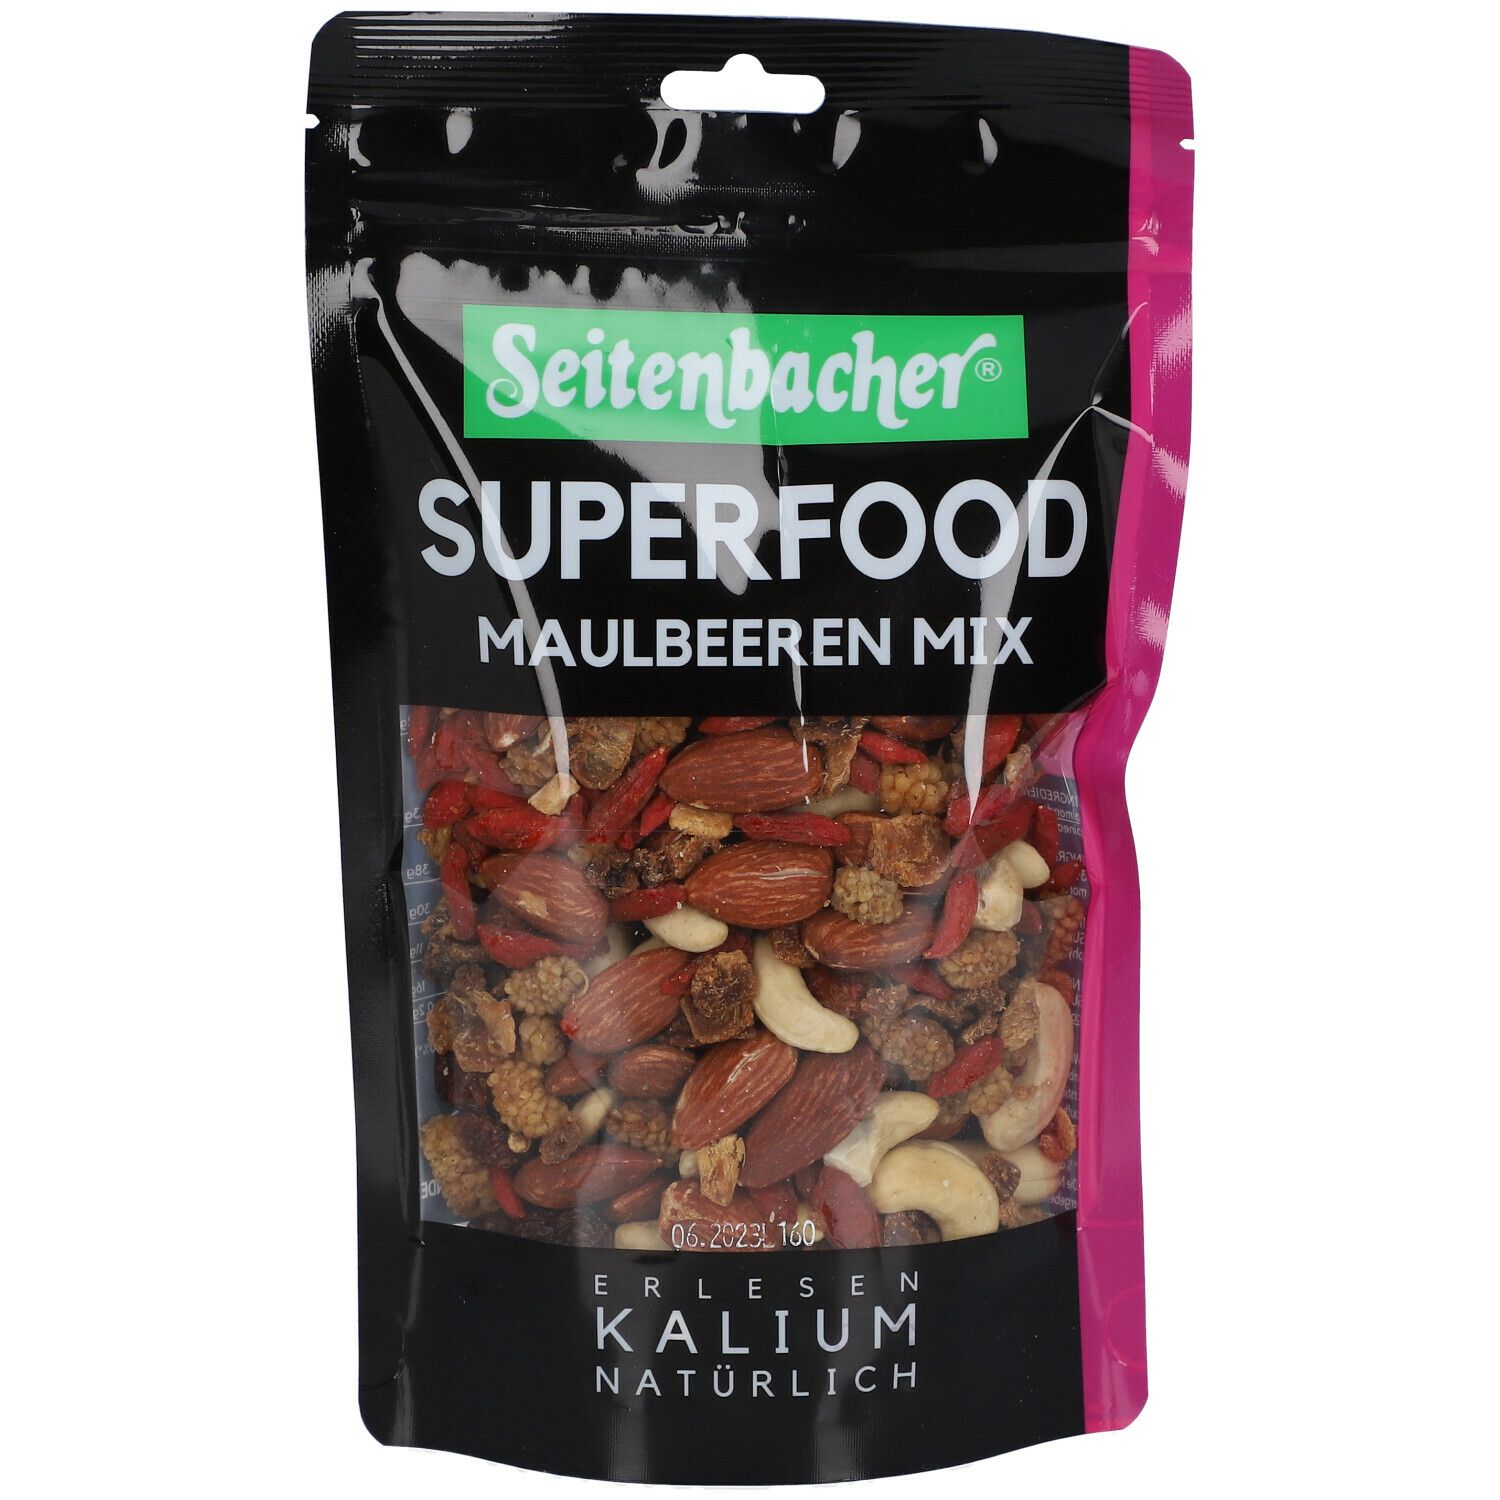 Seitenbacher® SUPERFOOD MAULBEEREN MIX